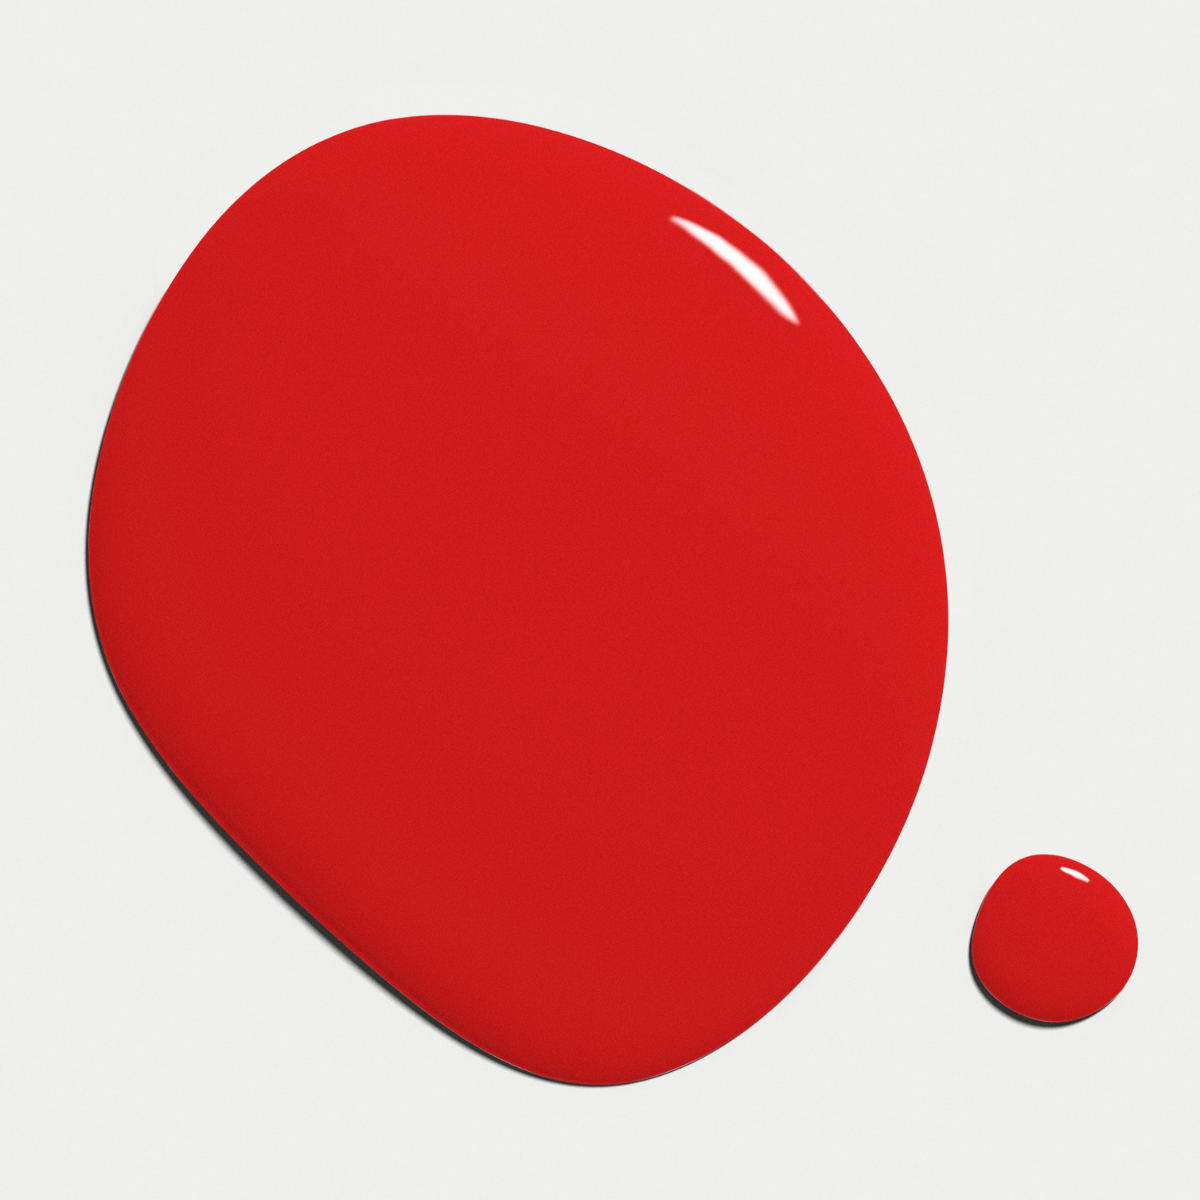 Nilens Jord Nail Polish – Scarlet Red 7643